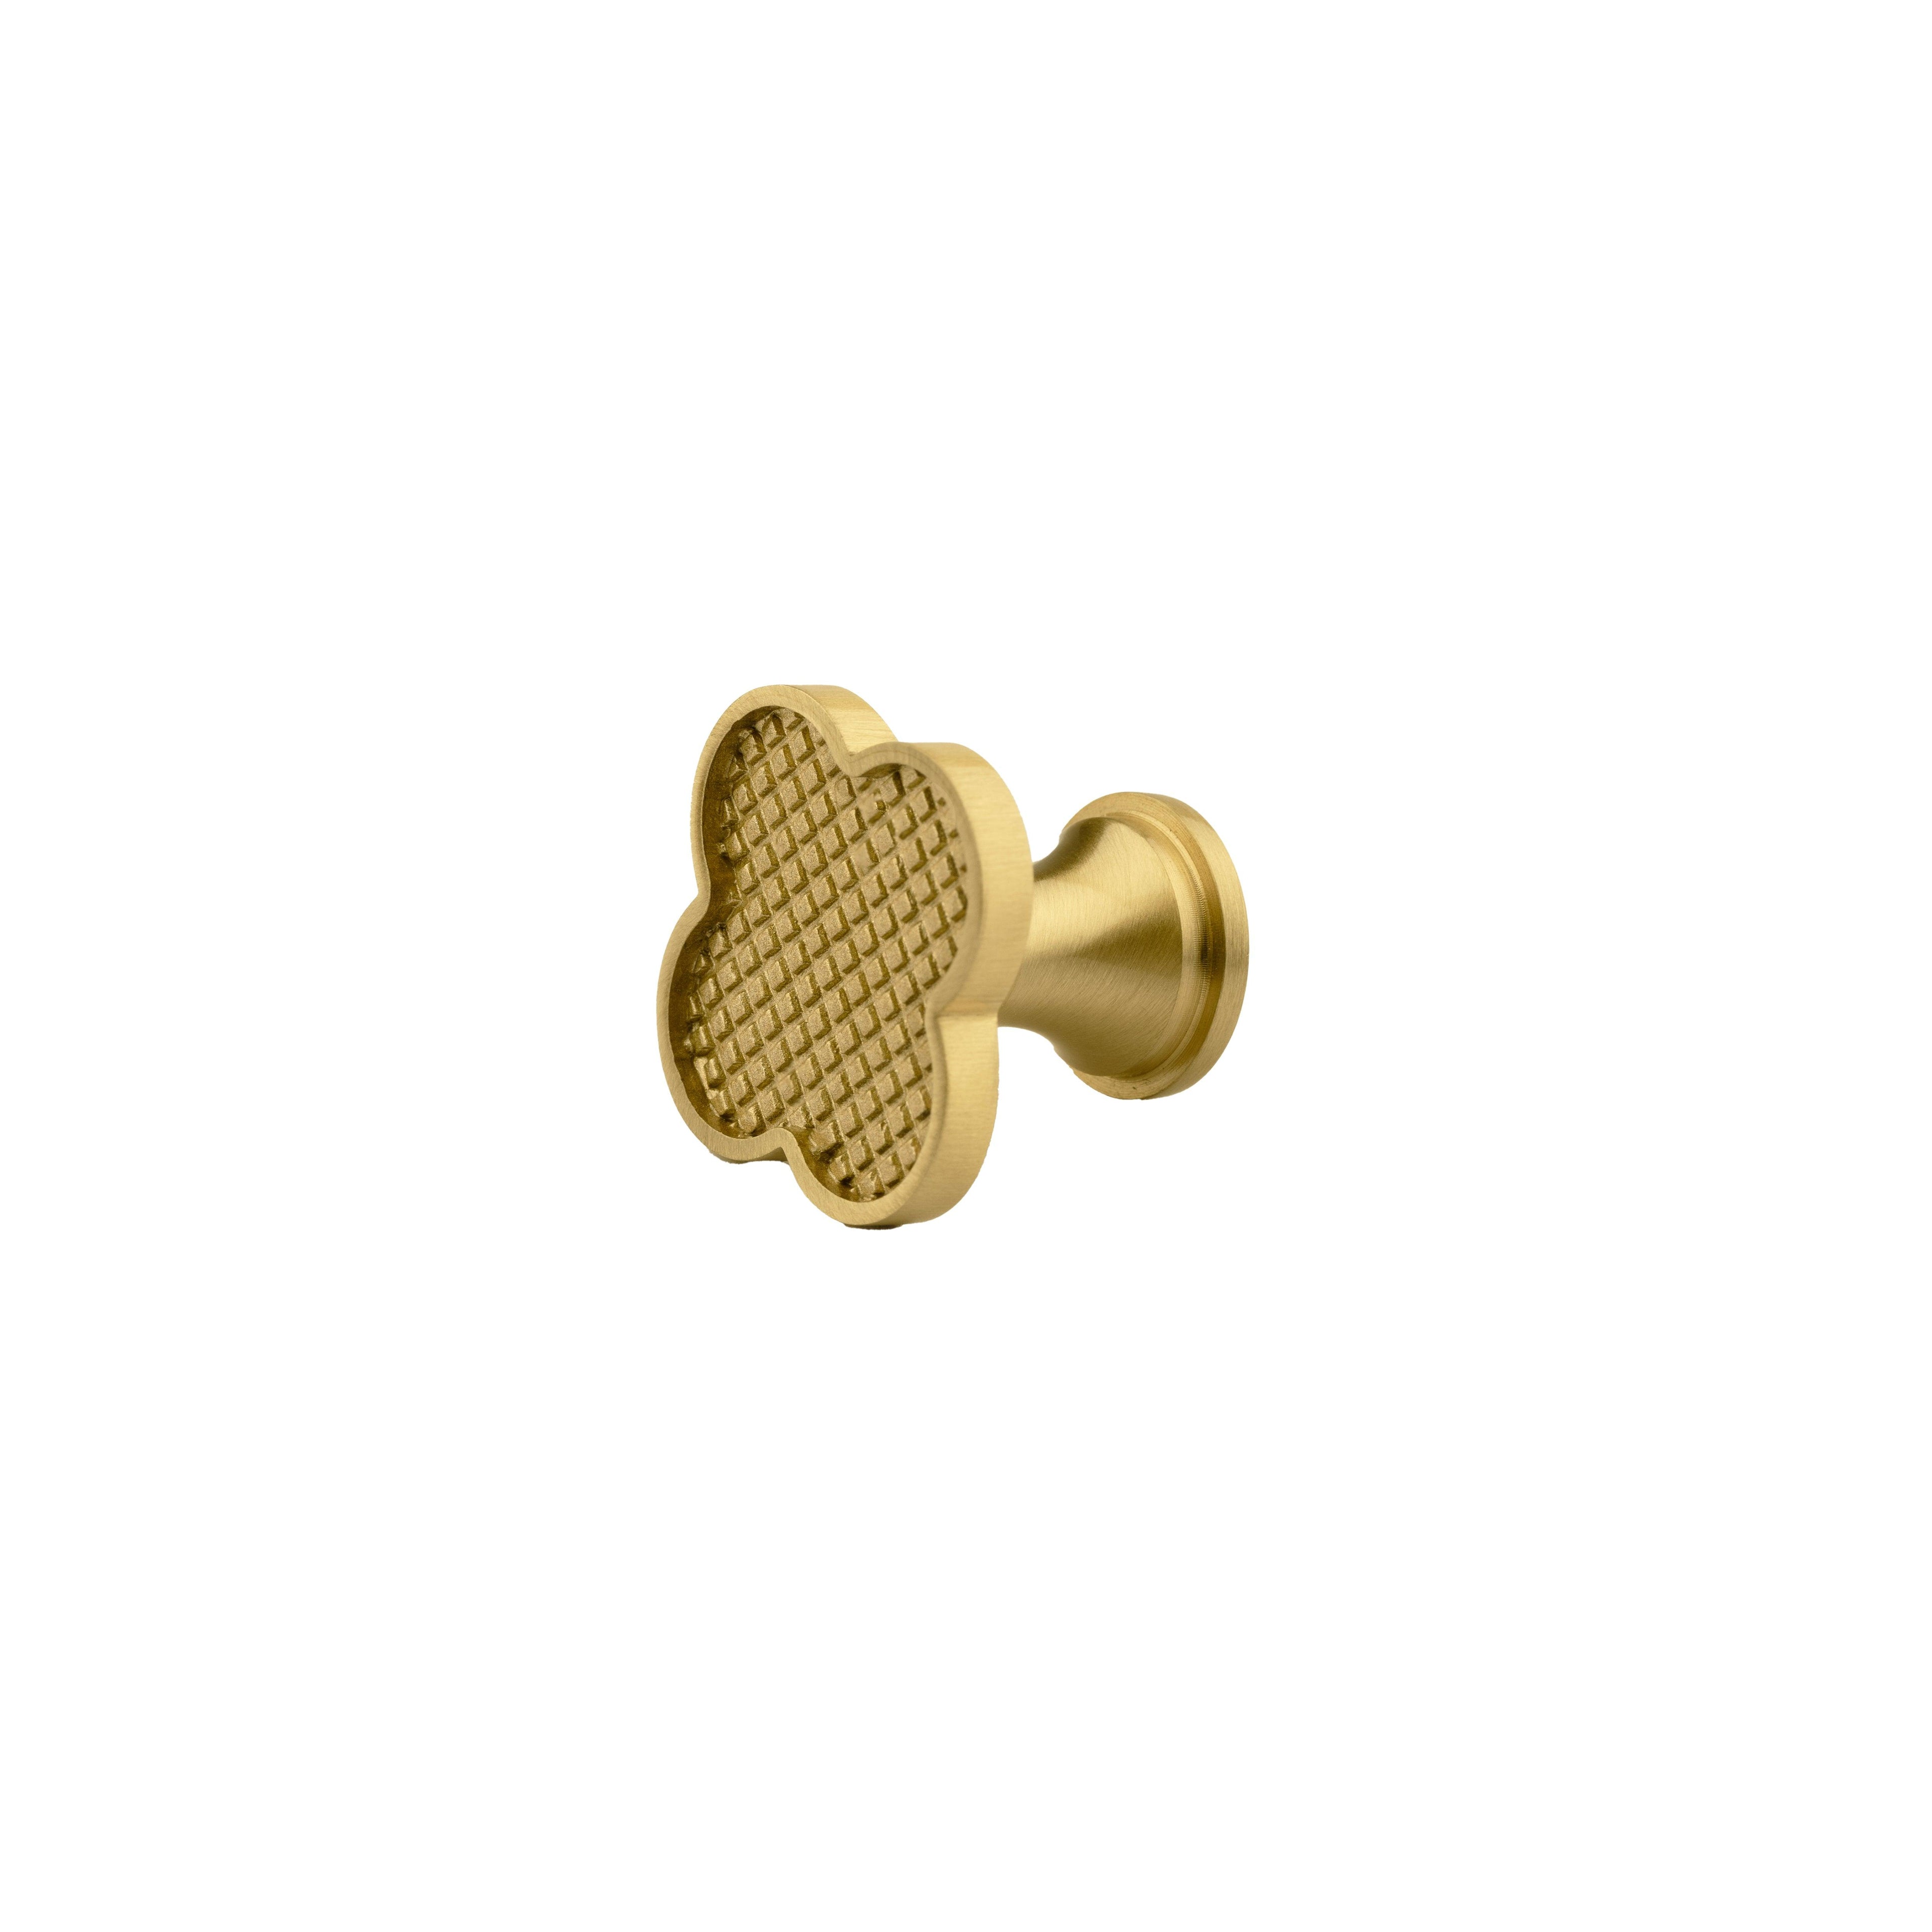 Alhambra Knob Knob 27mm / Latice Brass / Acrylic - M A N T A R A